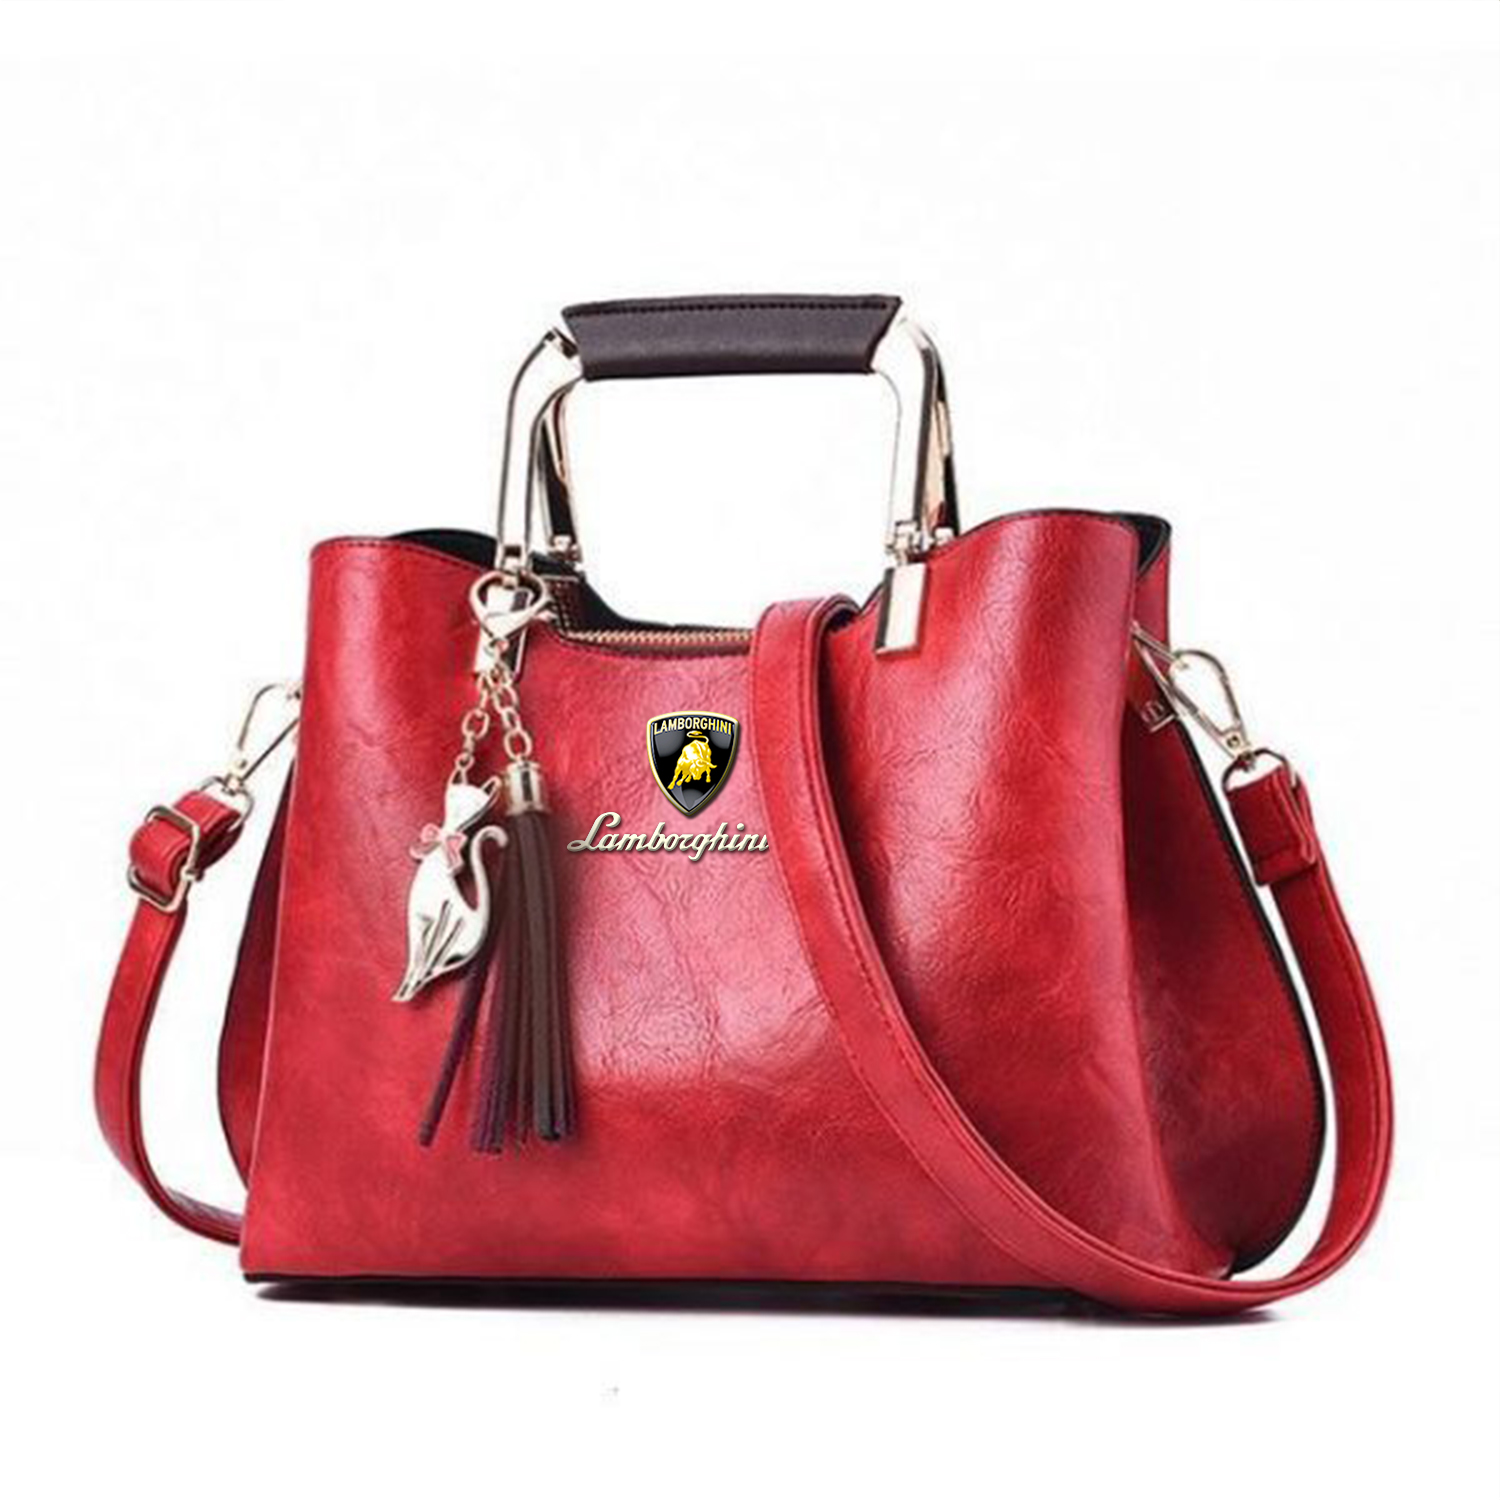 Lamborghini Deluxe Handbag For Women - monovibags